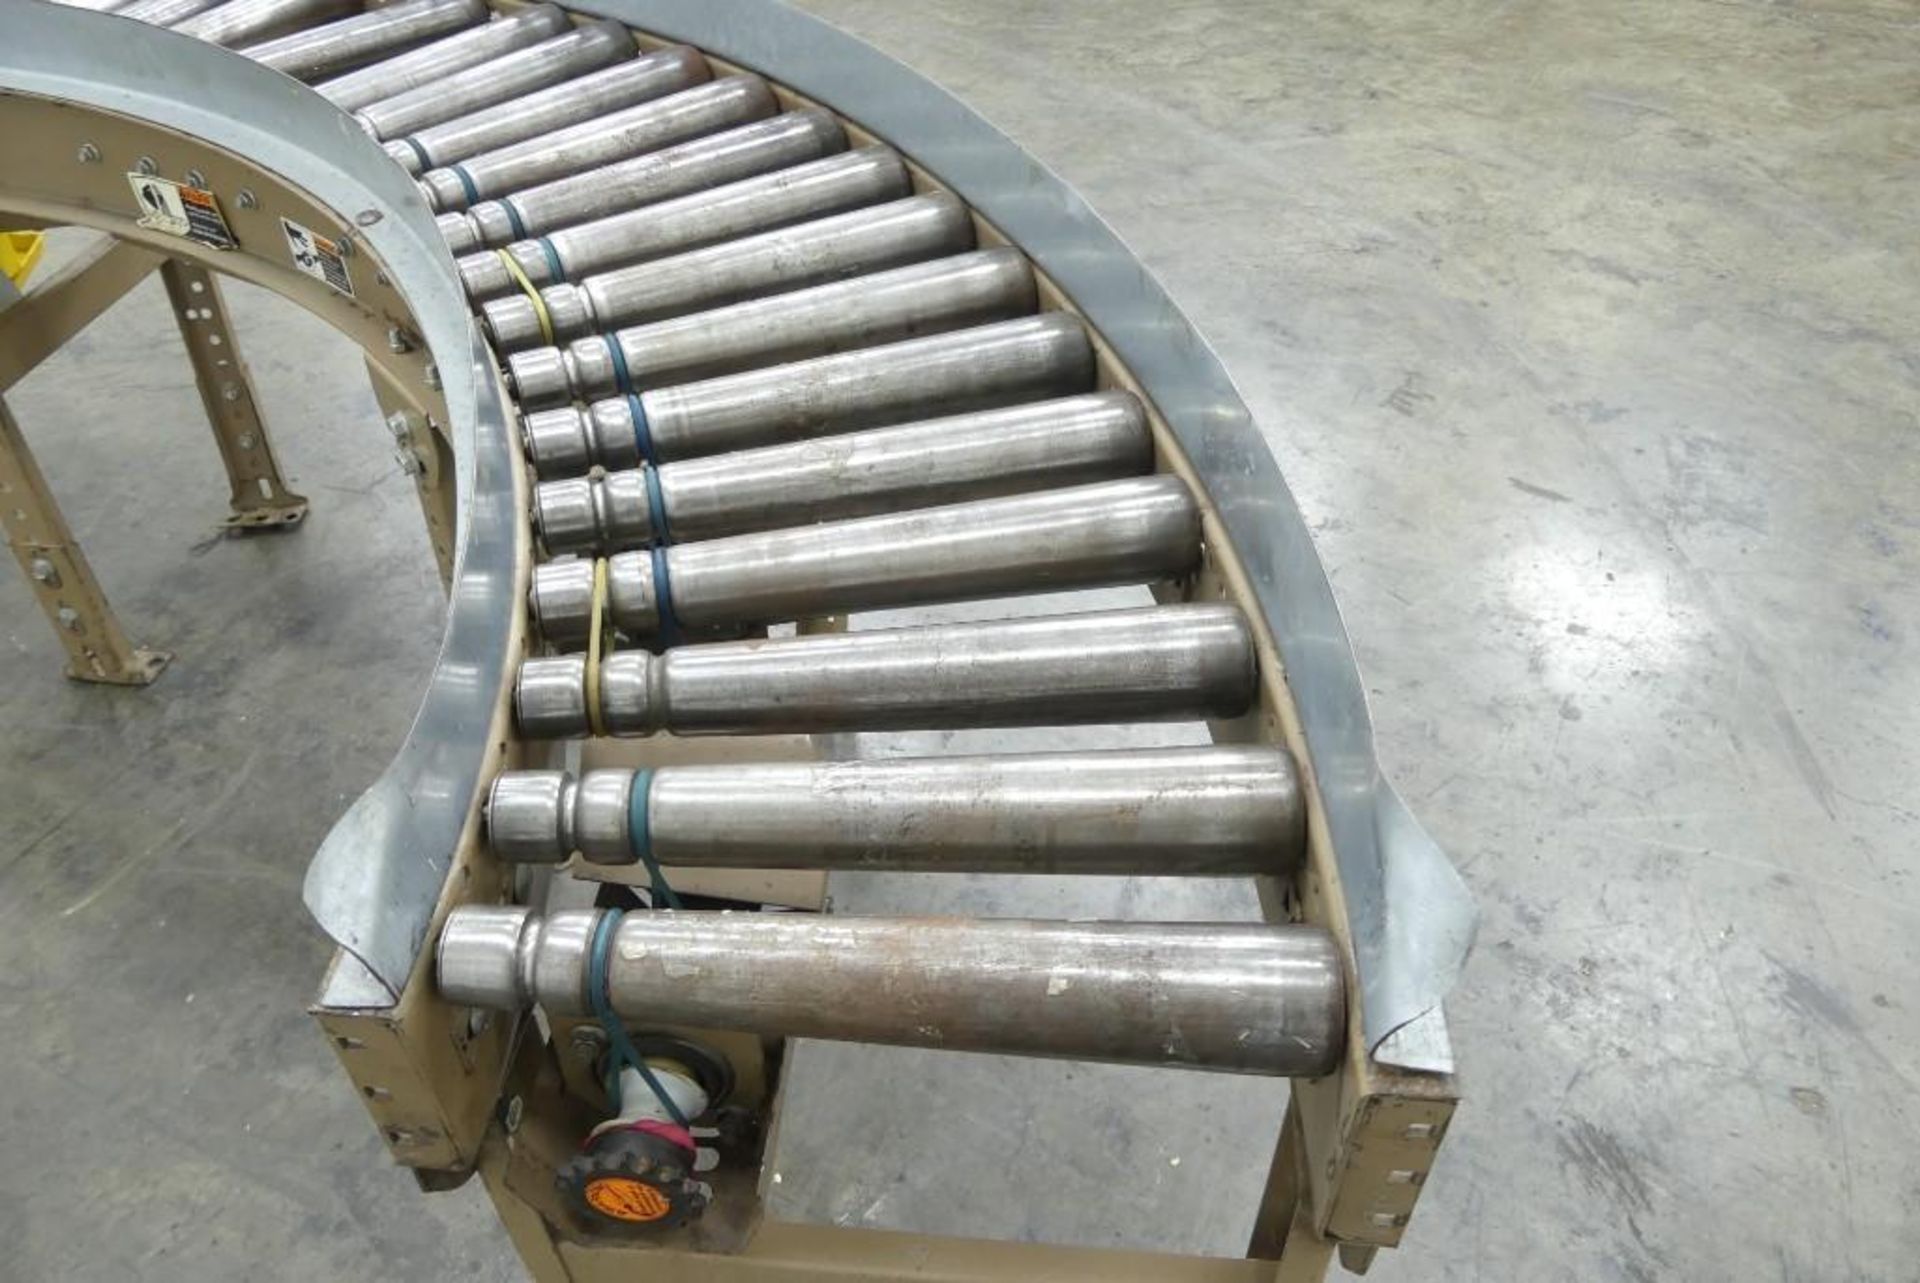 90 Degree Turn Lineshaft Roller Conveyor 15" Wide - Image 4 of 7